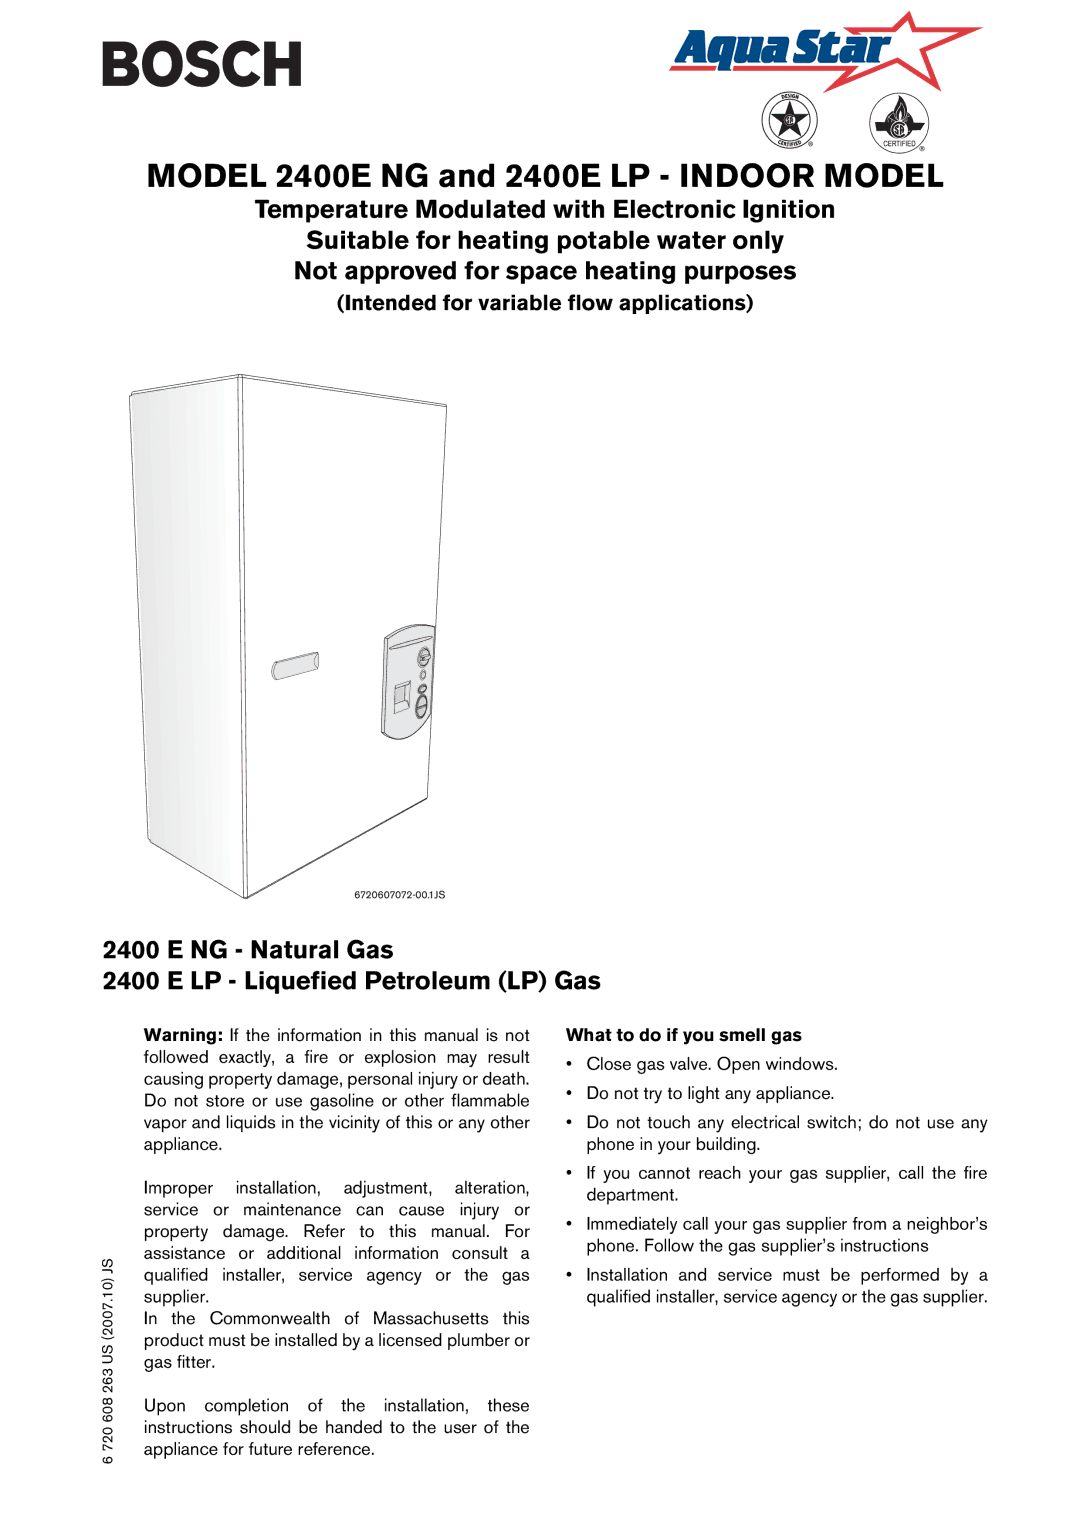 Bosch Appliances 2400E LP manual NG Natural Gas LP Liquefied Petroleum LP Gas, Intended for variable flow applications 